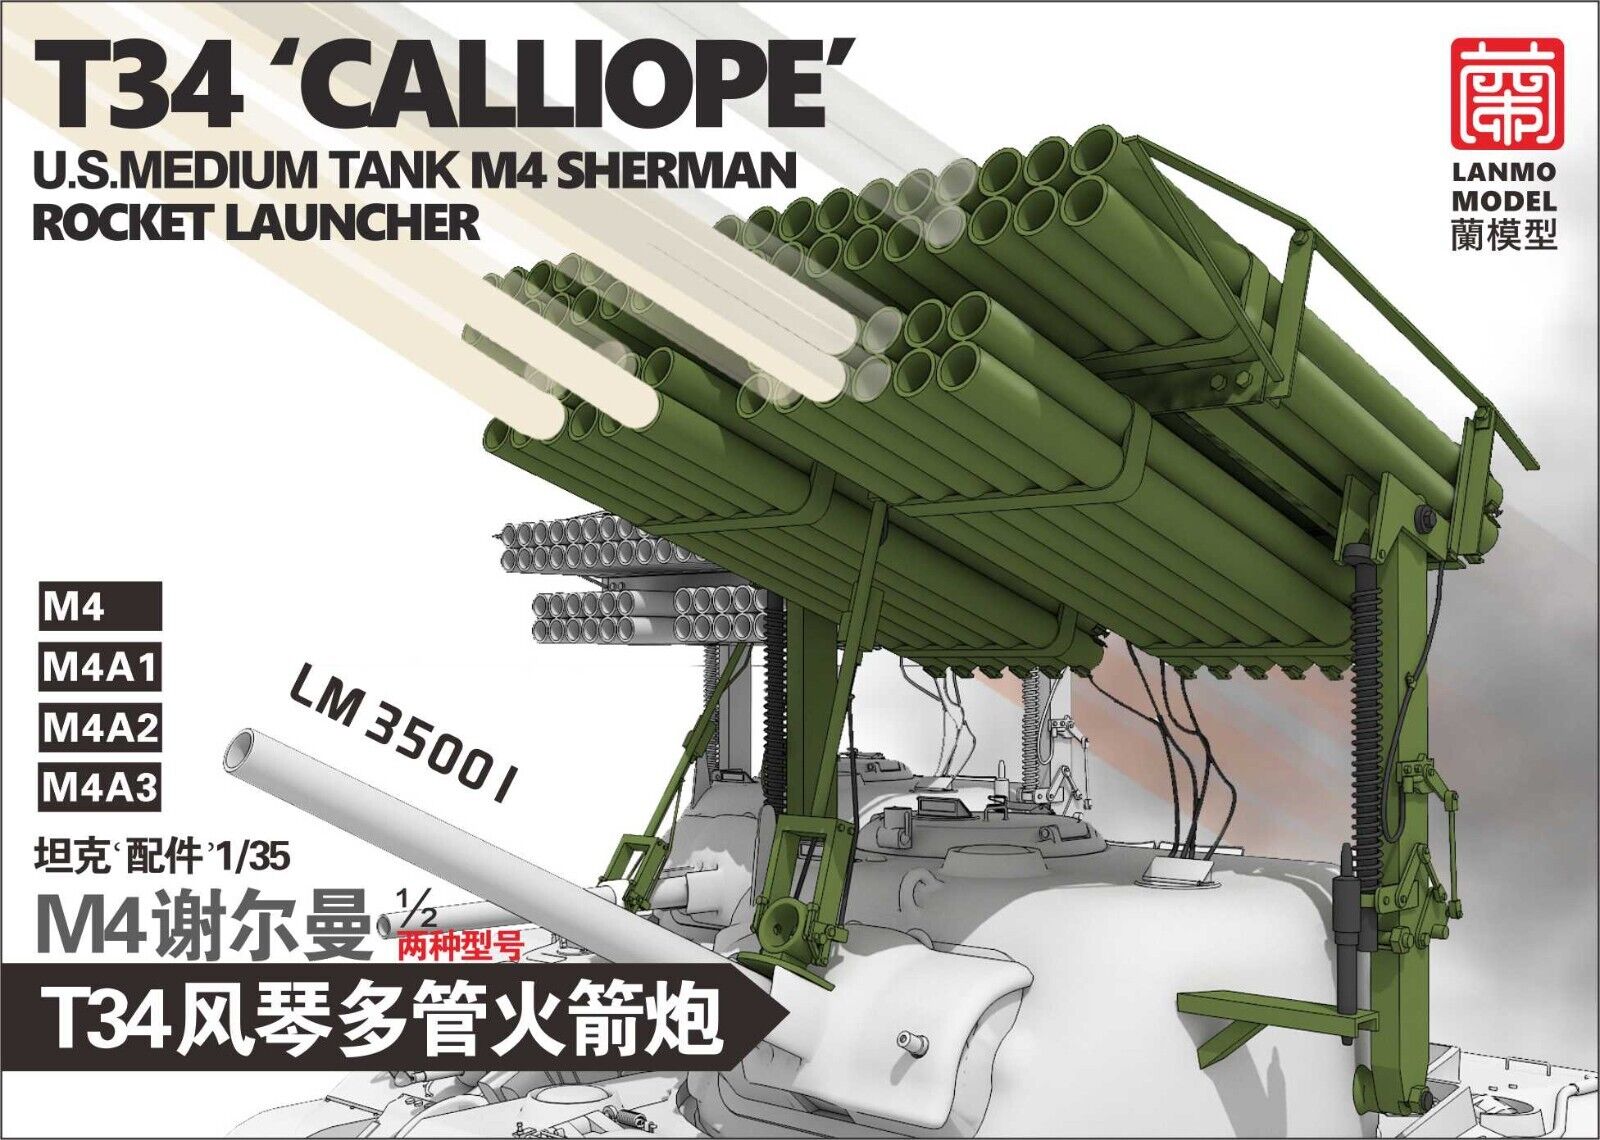 LM-35001  дополнения из металла  Т34 'Calliope' US medium tank M4 Sherman rocket launcher  (1:35)